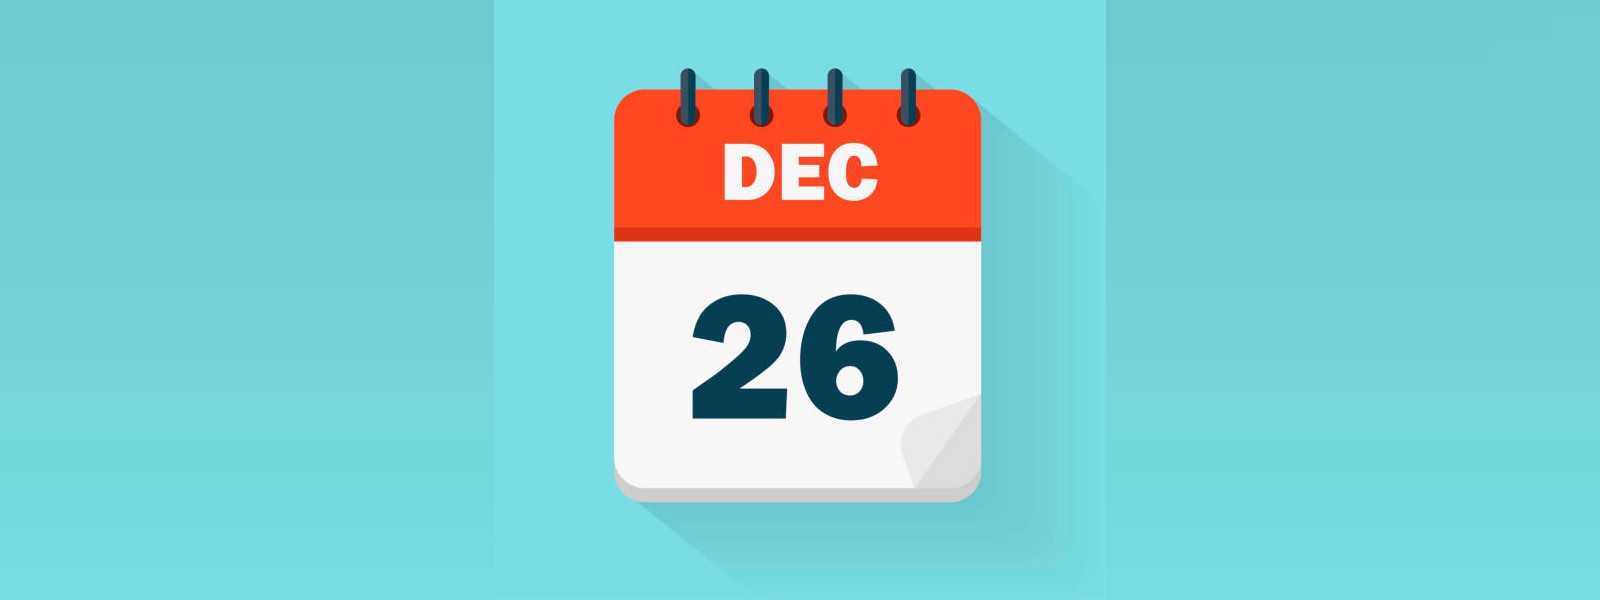 Dec. 26 declared as public holiday